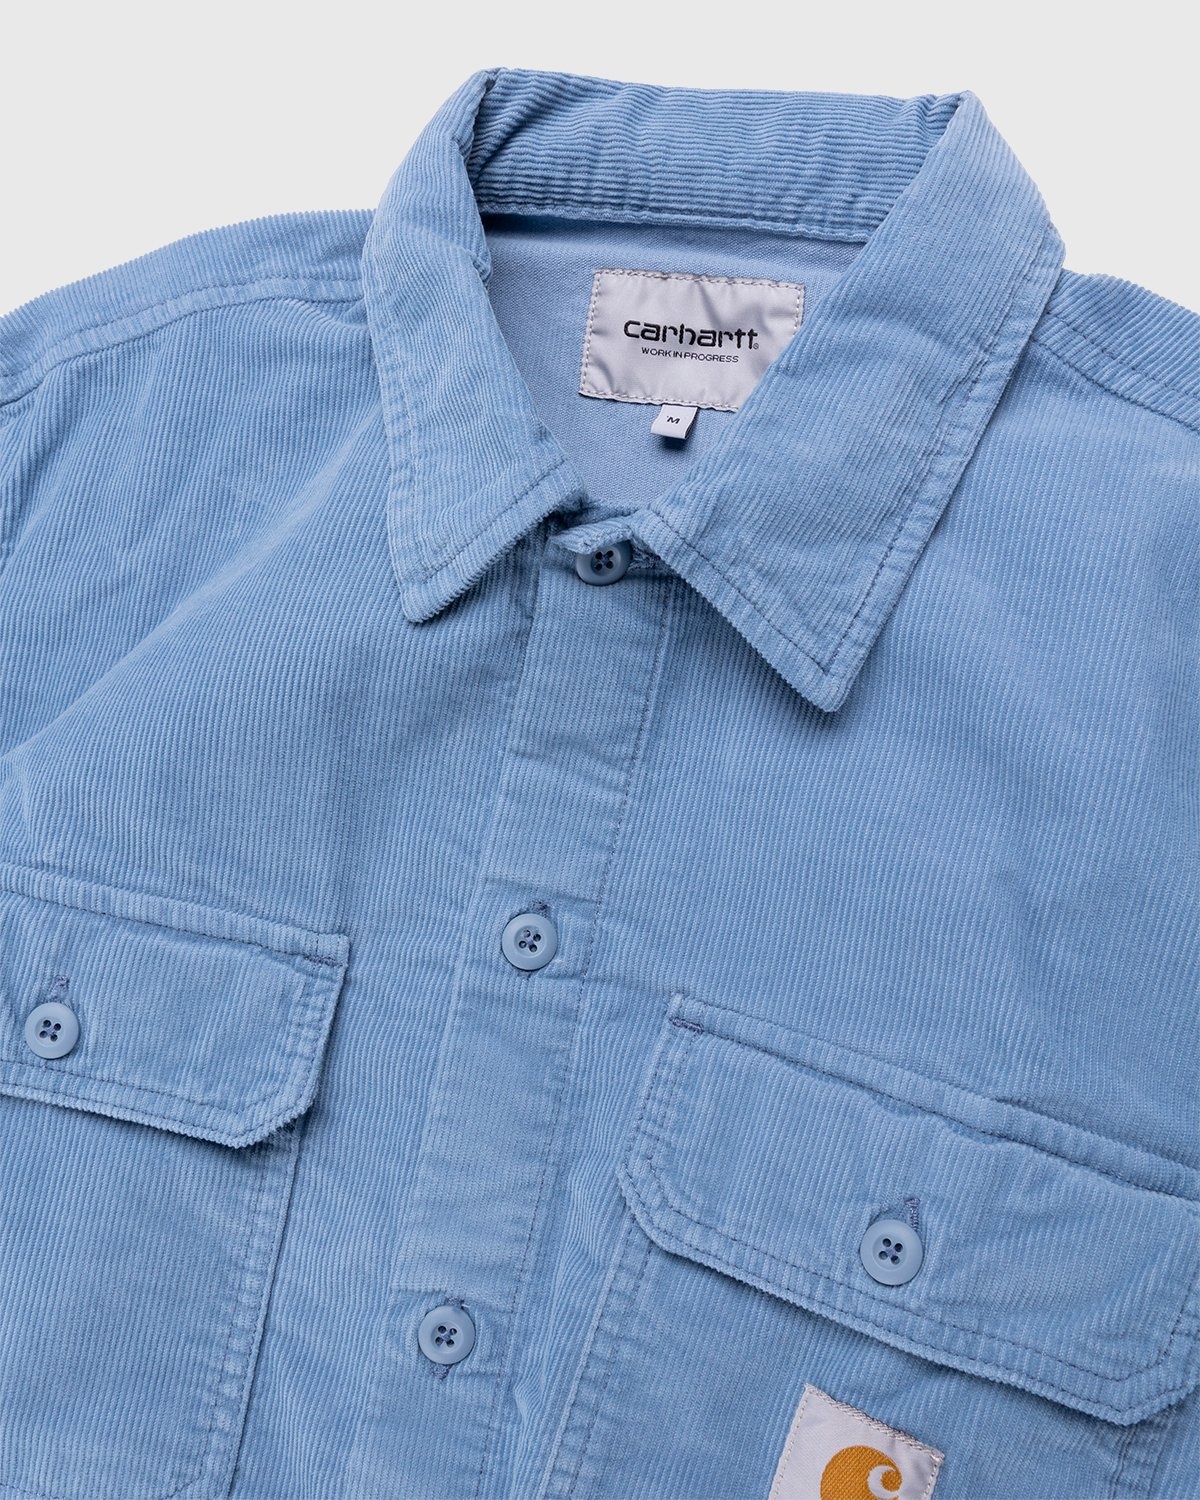 Carhartt WIP – Dixon Shirt Jacket Icy Water Rinsed - Overshirt - Blue - Image 3